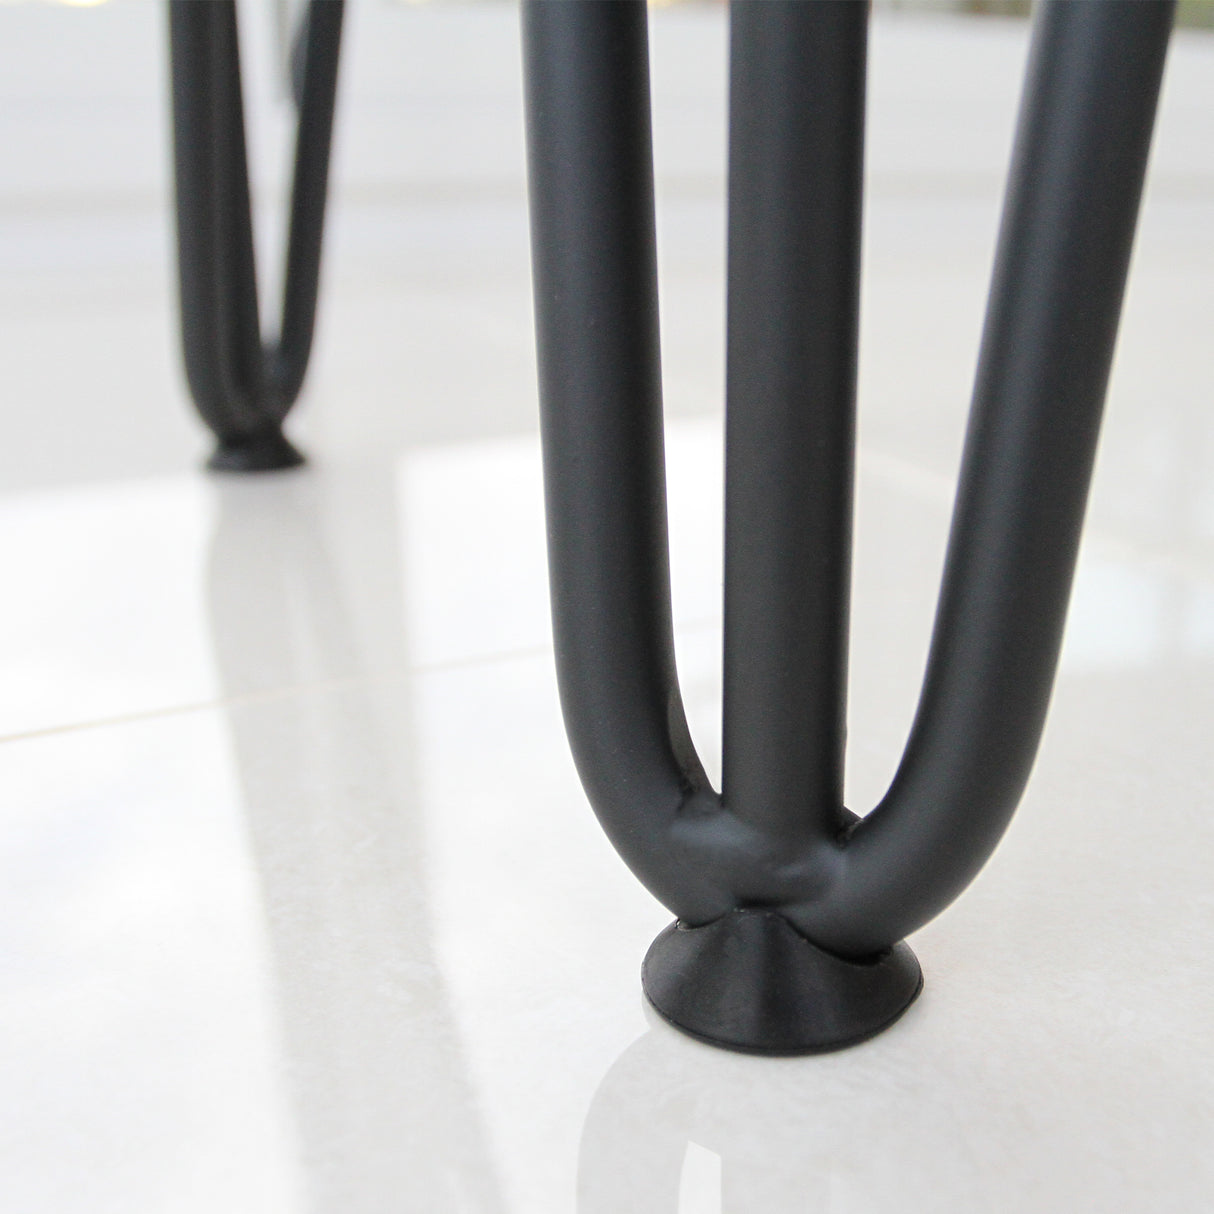 4 x 12" Hairpin Legs - 2 Prong - 10mm - Black